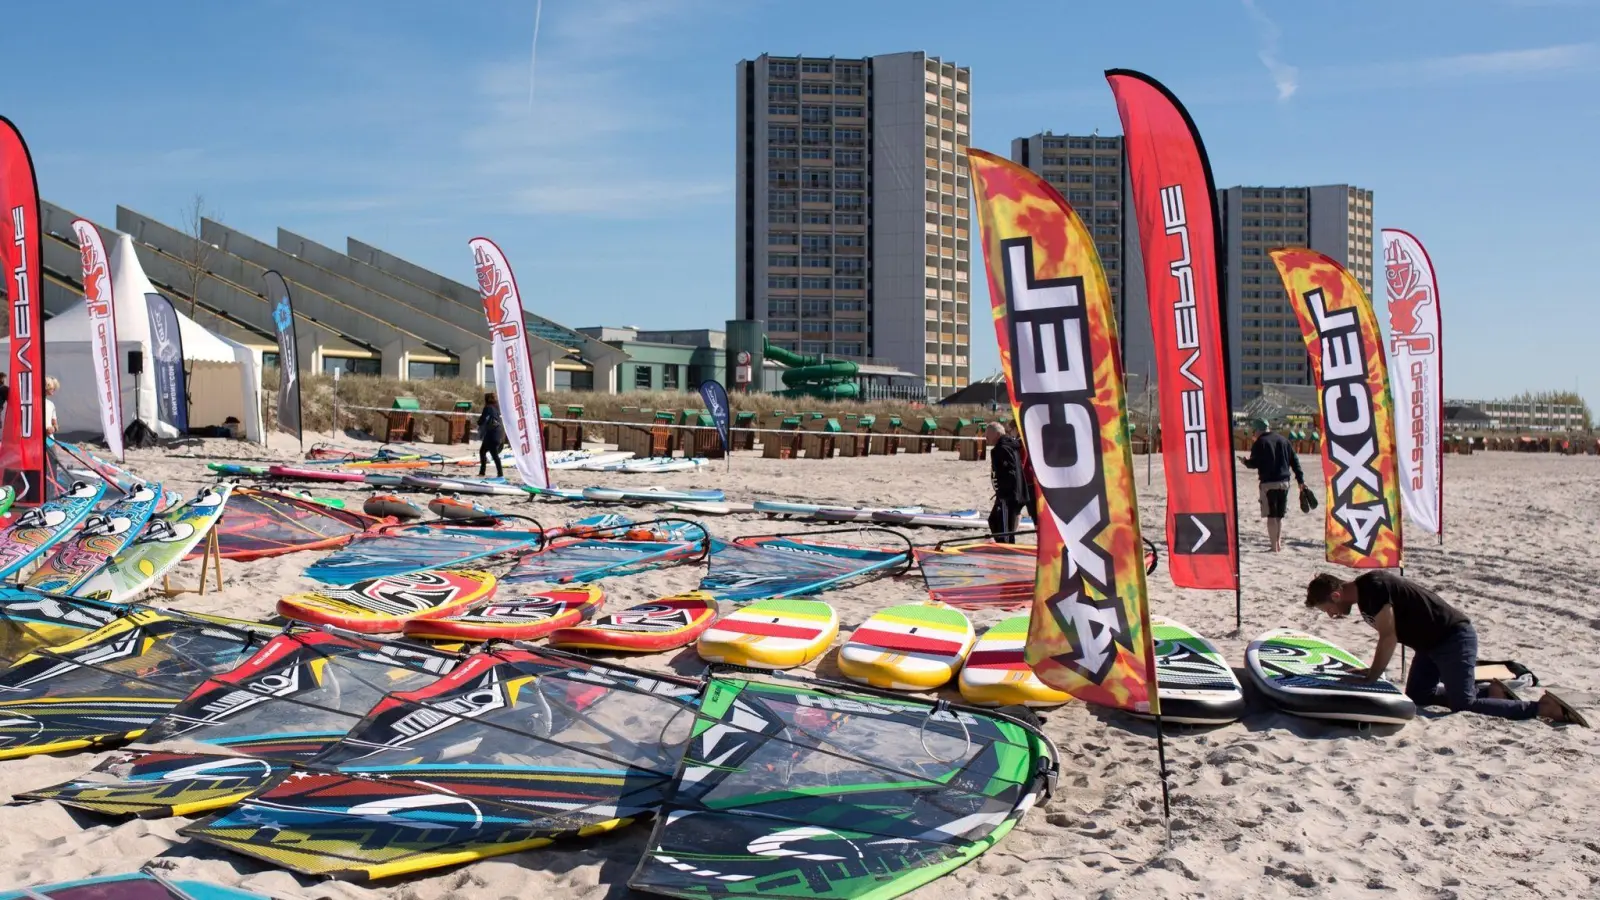 Das Surf-Festival auf Fehmarn gilt als größte Windsurf-Outdoor-Messe Europas. (Foto: Axel Heimken/dpa)